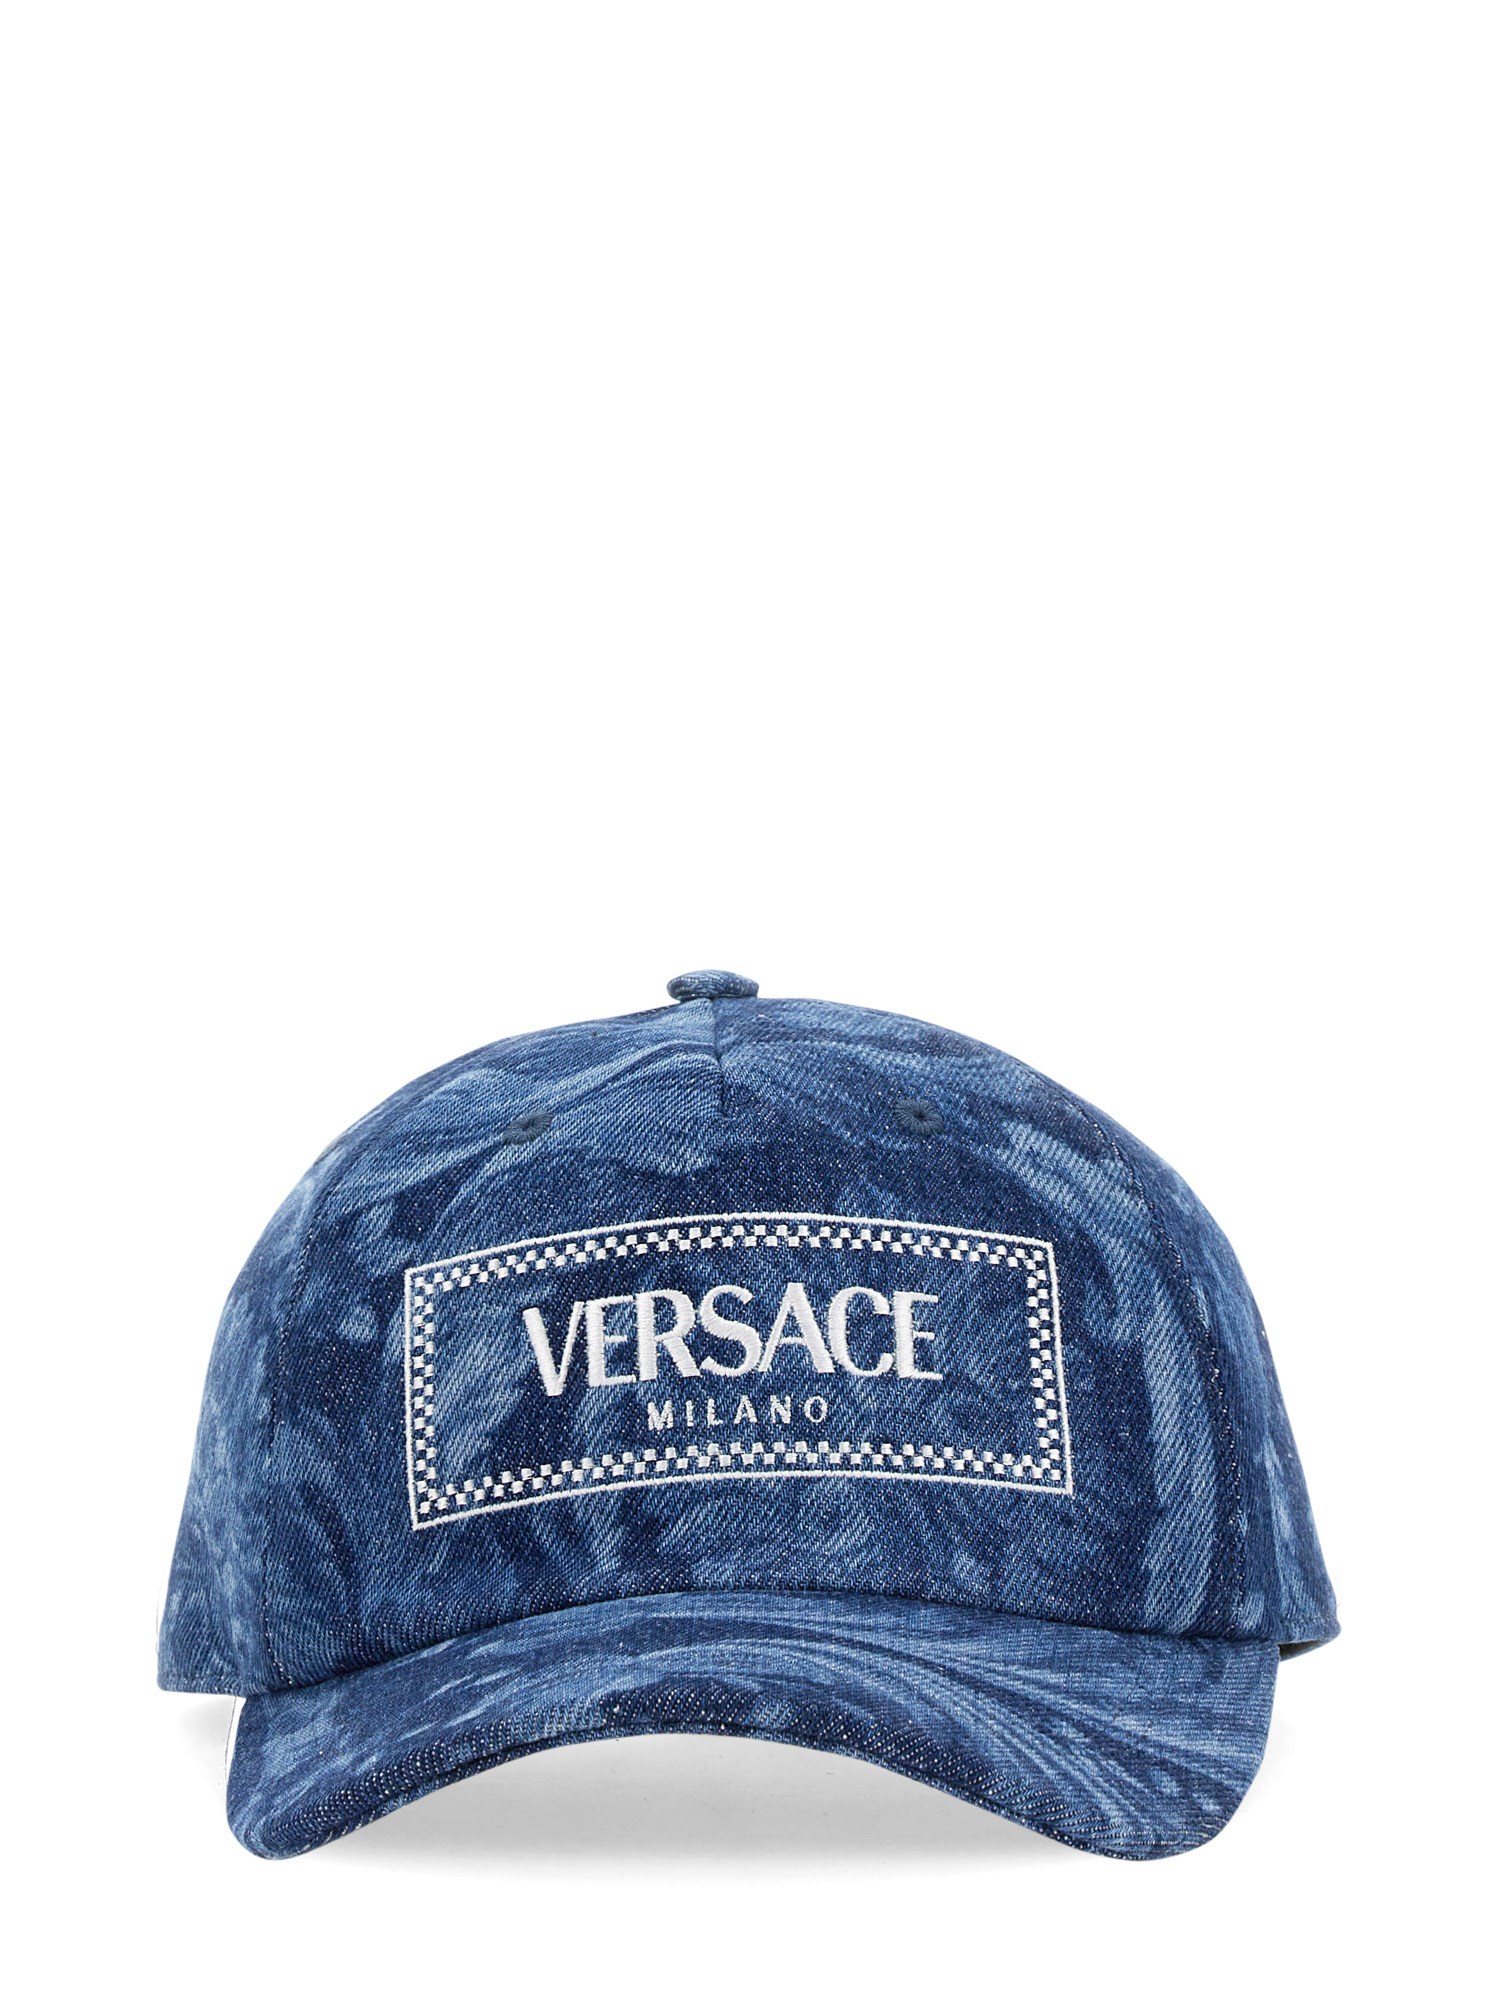 Versace versace baseball hat with logo